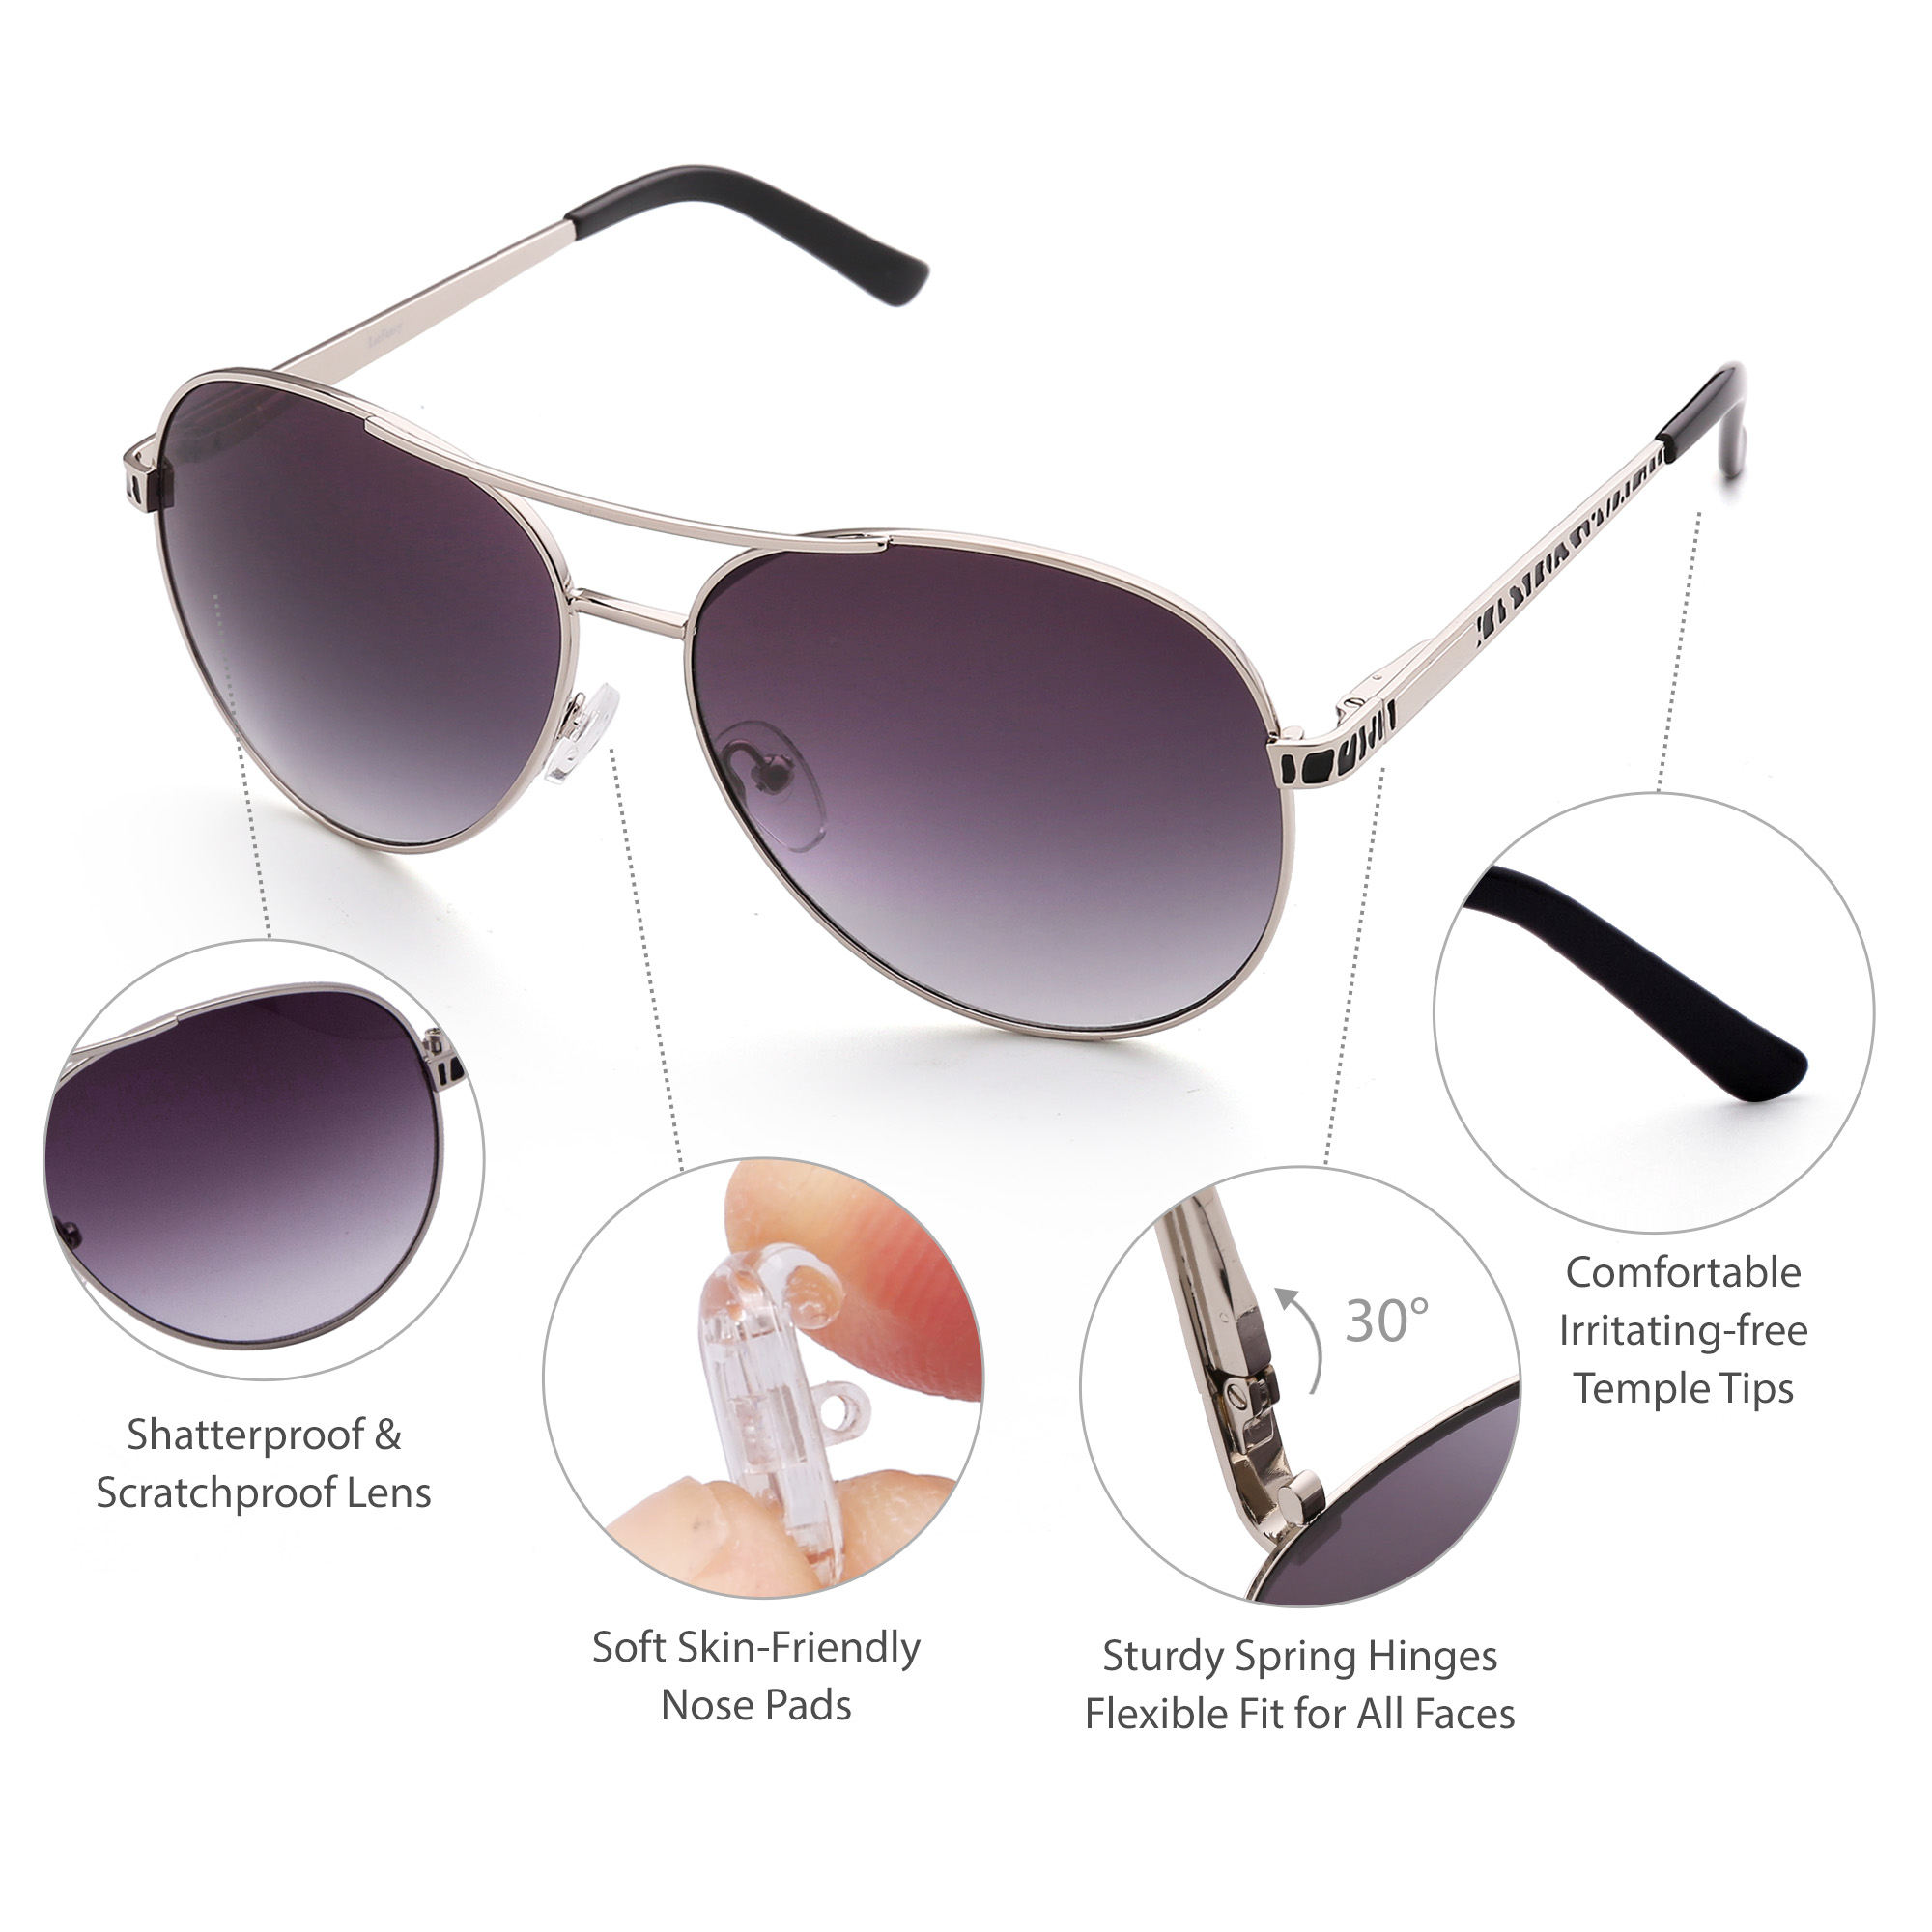 LotFancy Women's Aviator Sunglasses, Ultra Lightweight,UV400 Protection,Light Gray - image 5 of 7